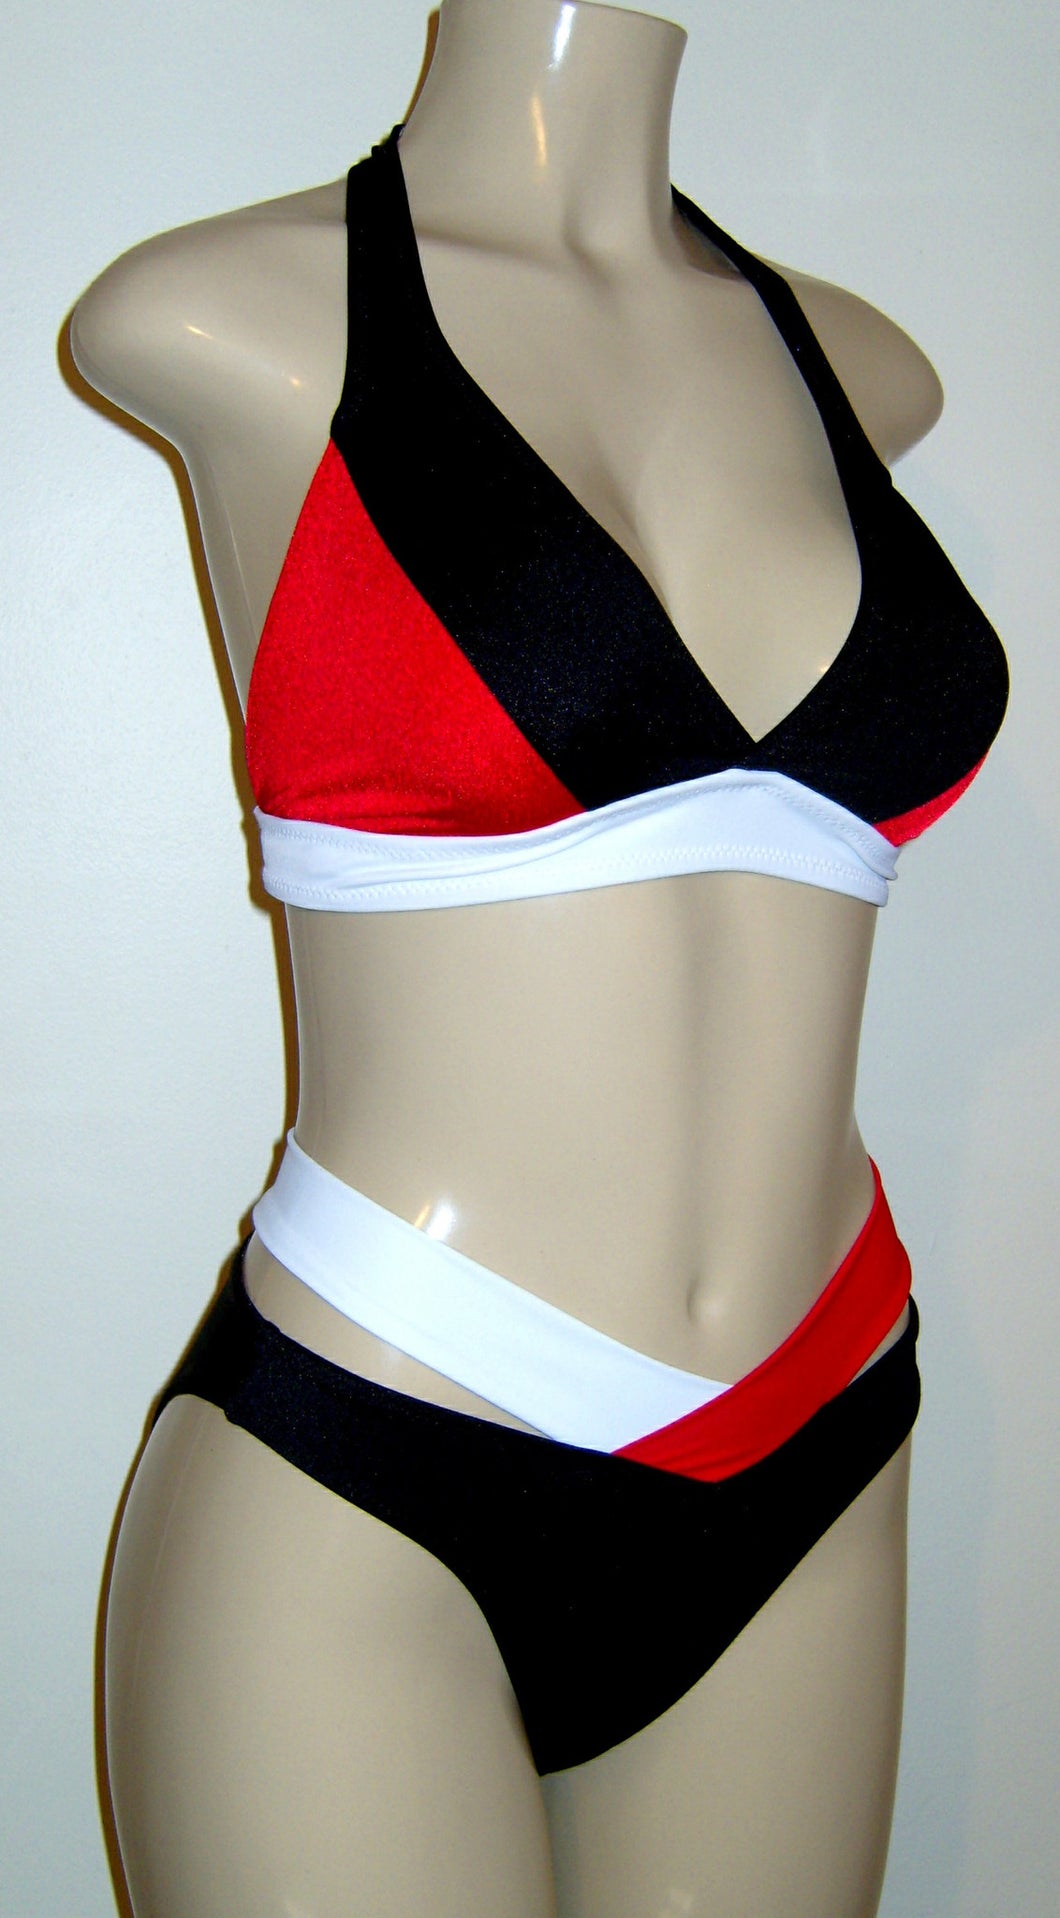 Goddess Halter Top and Goddess Bikini Bottom with contrasting colors. Seam constructed top and bikini bottom with separate waistband. 